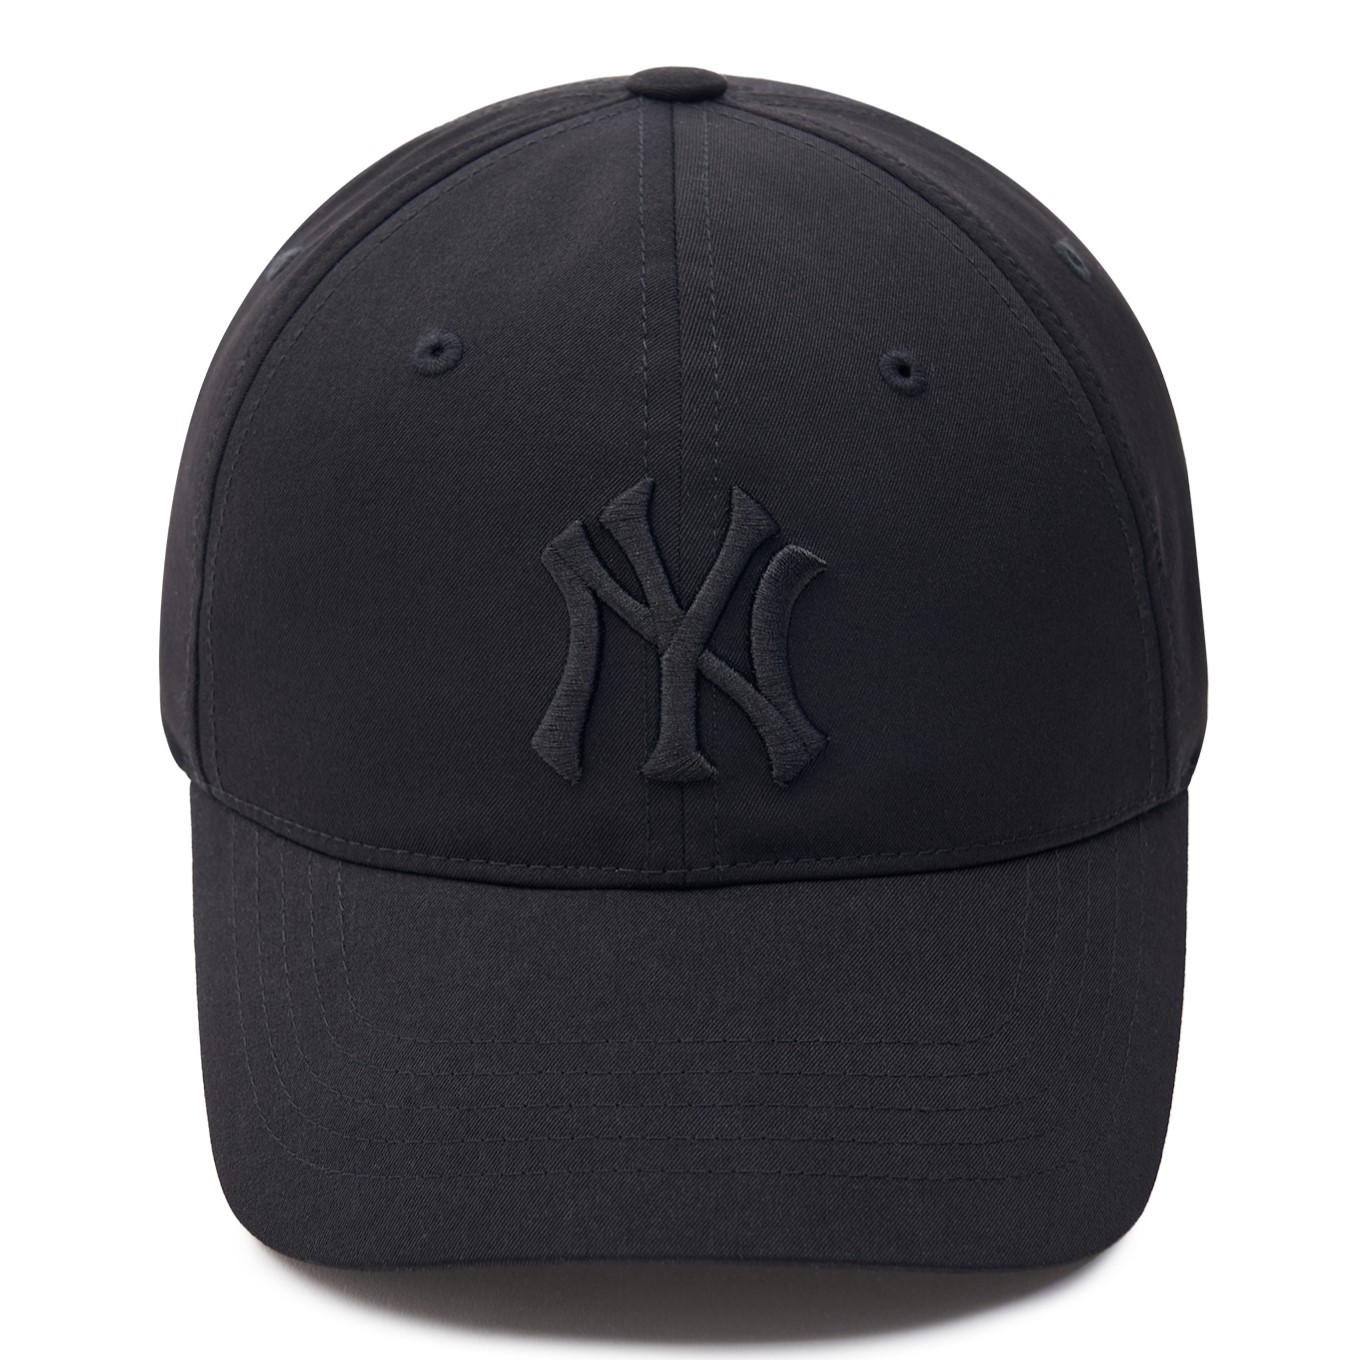 NÓN KẾT MLB NY FIELDER FIT FLEX UNSTRUCTURED BALL CAP NEW YORK YANKEES 3ACP0393N-50BKS 8